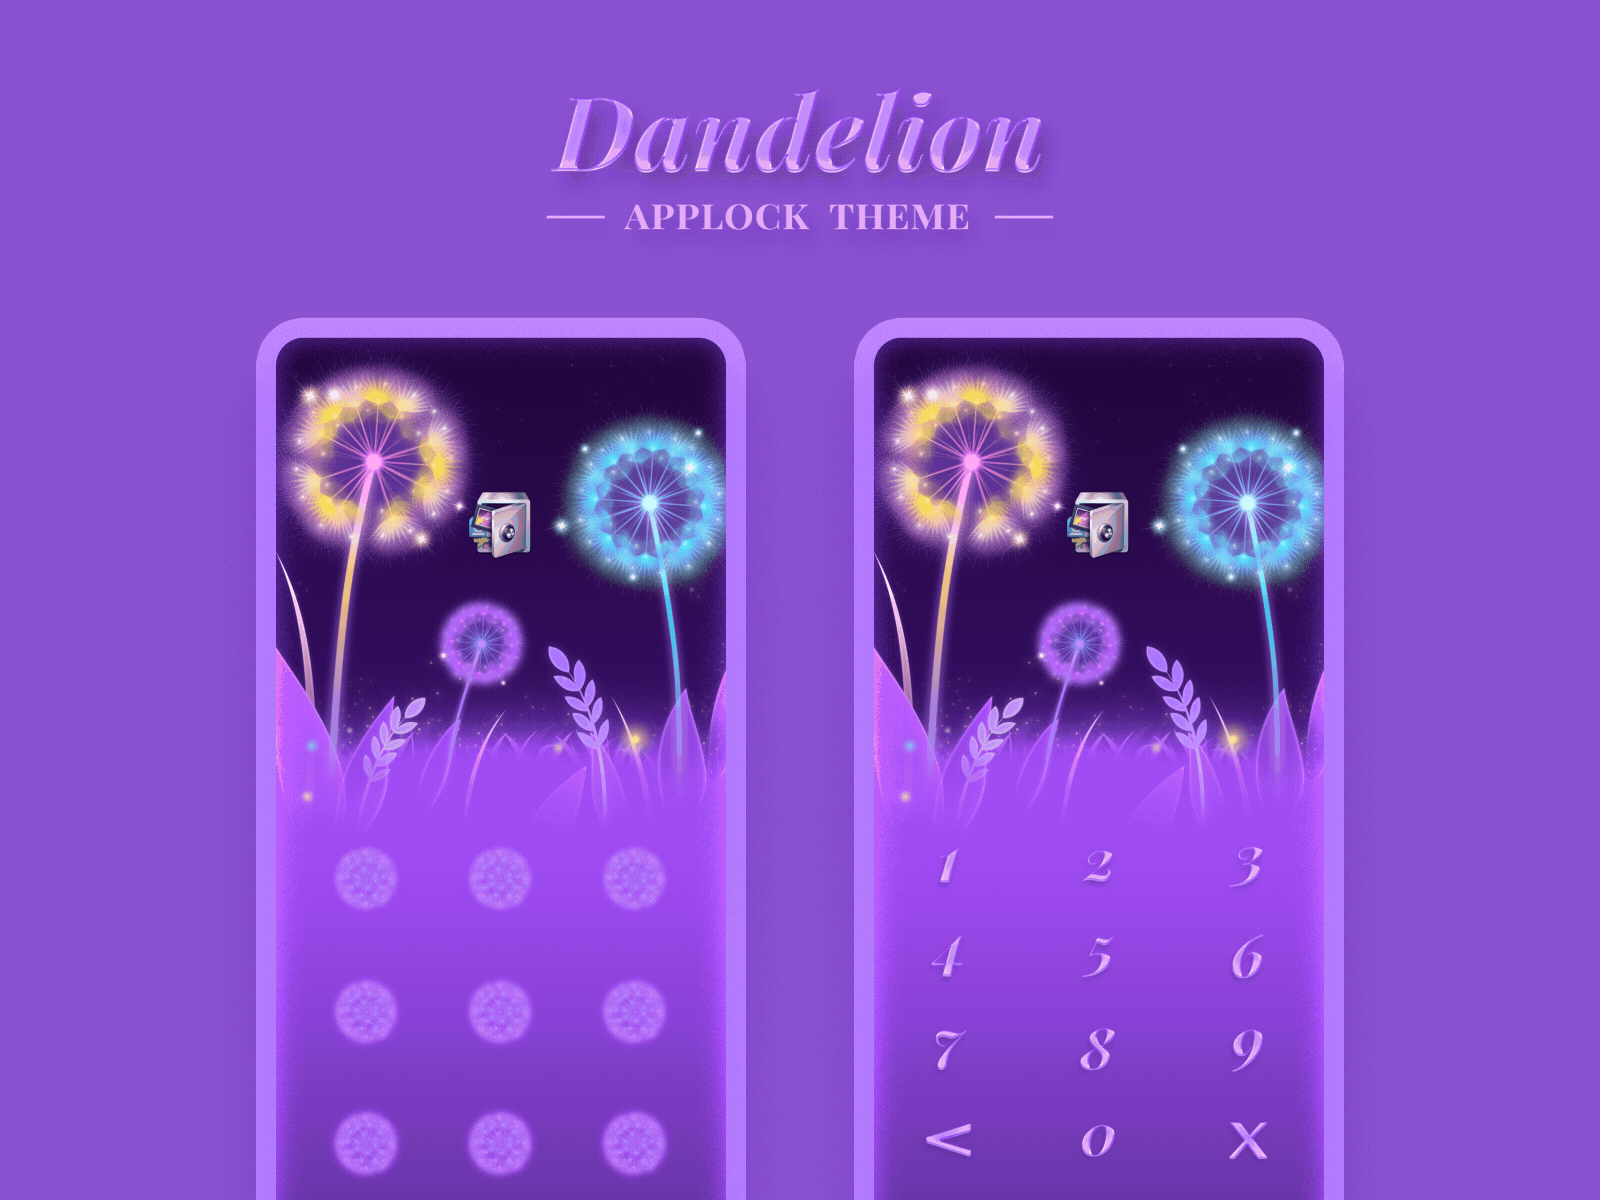 AppLock Live Theme - Dandelion